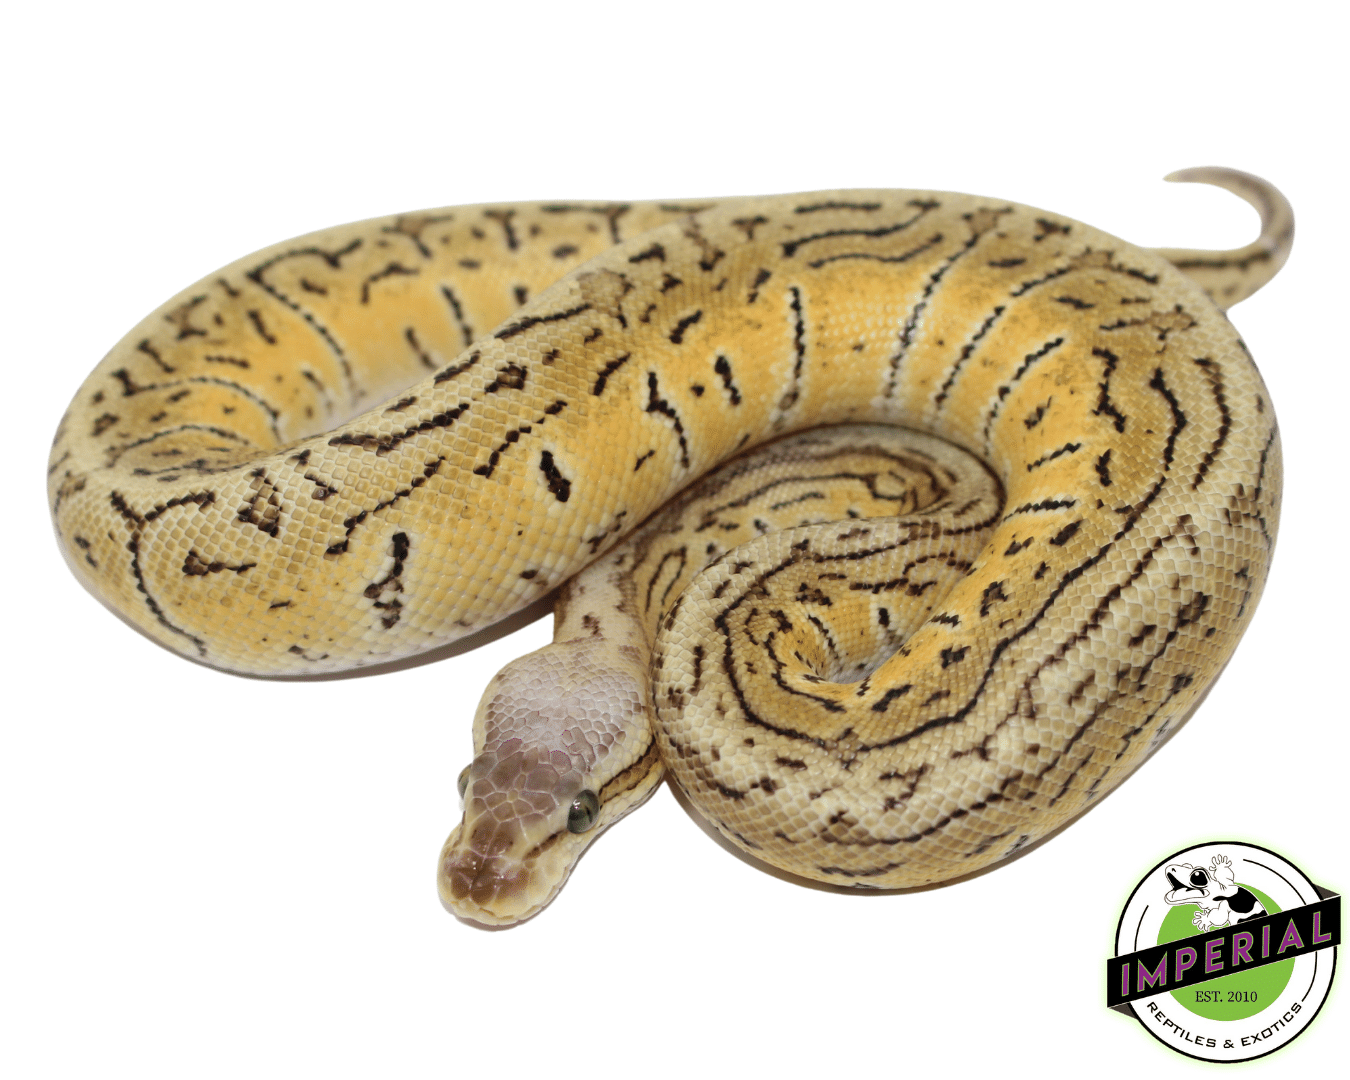 Pastel Vanilla Pinstripe Trick ball python for sale, buy reptiles online